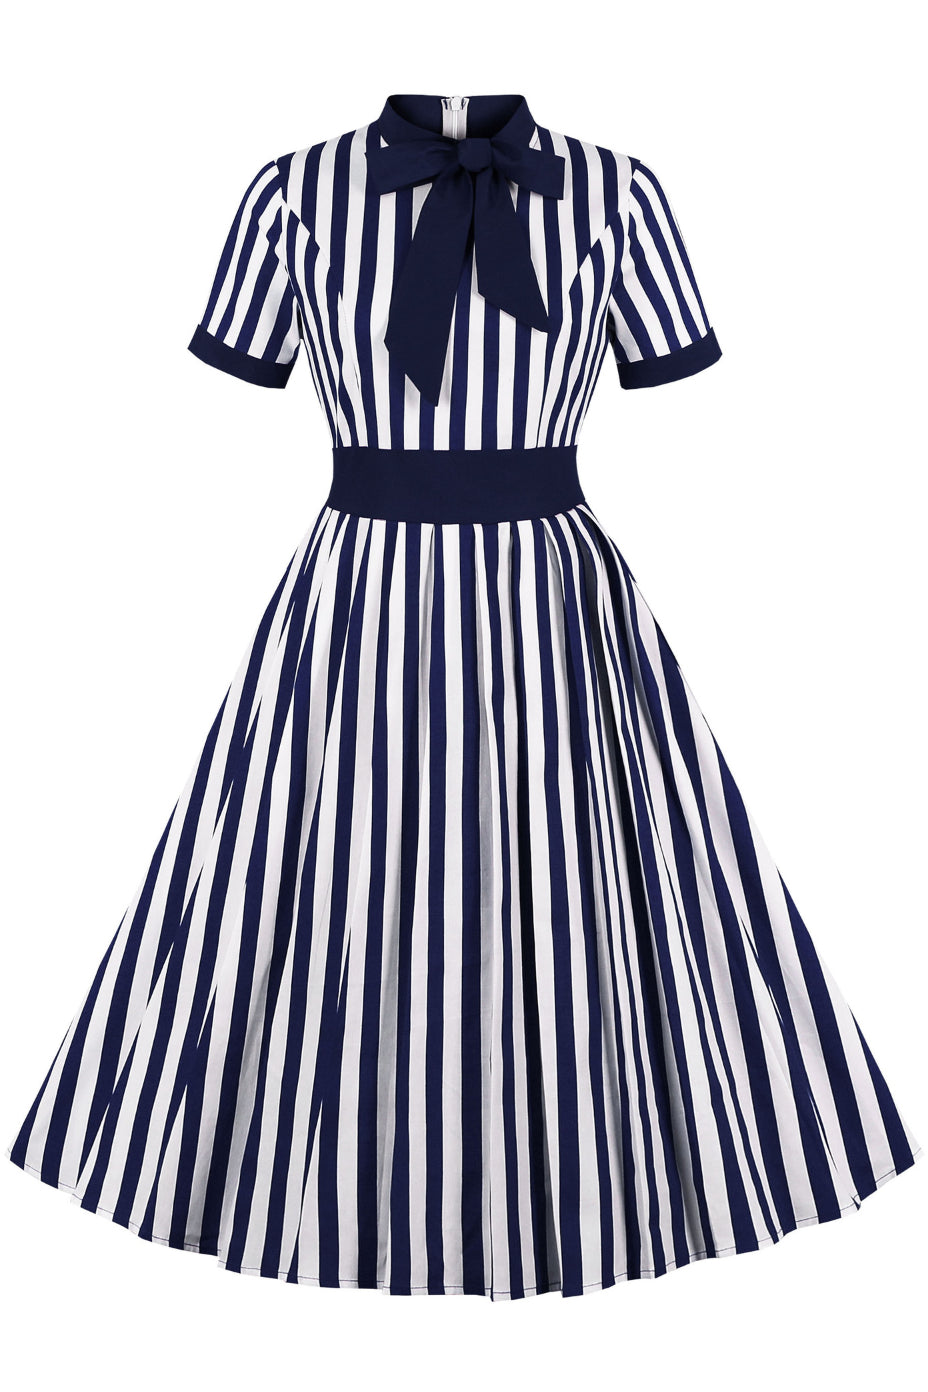 Navy Blue Ribbon Collar Short Sleeves A-line Vintage Dress